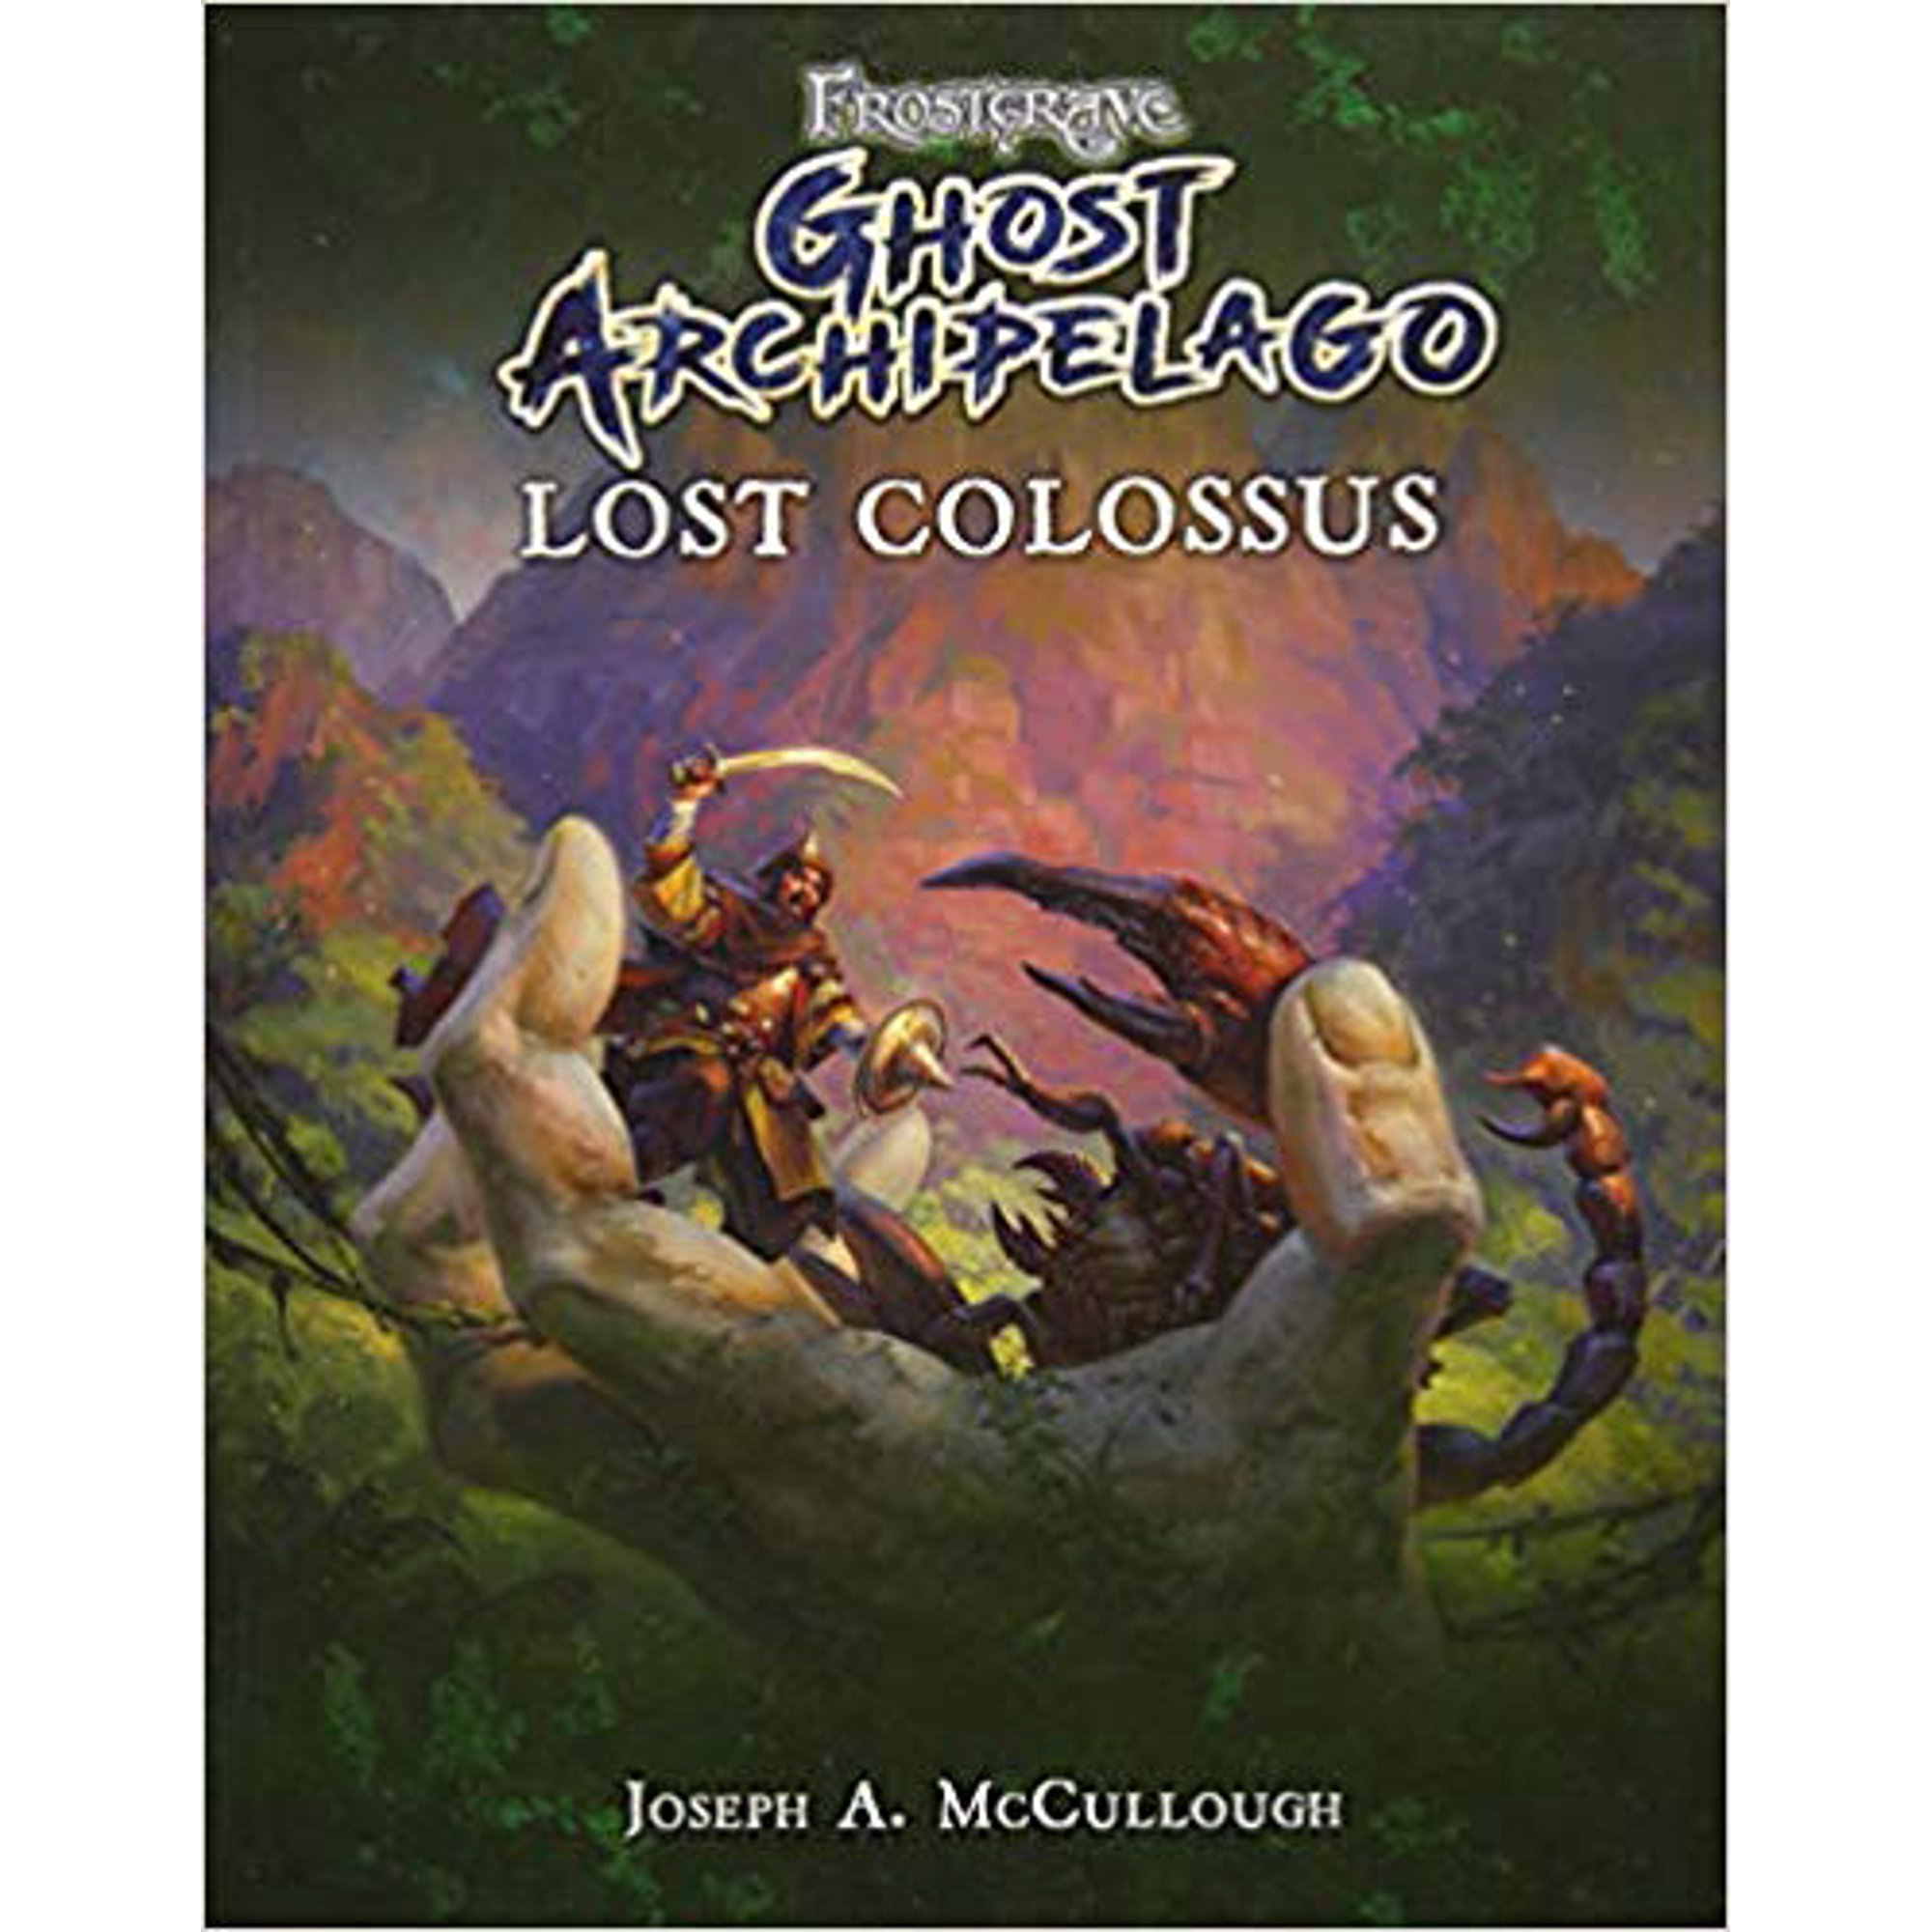 Frostgrave: Ghost Archipelago - Lost Colossus 